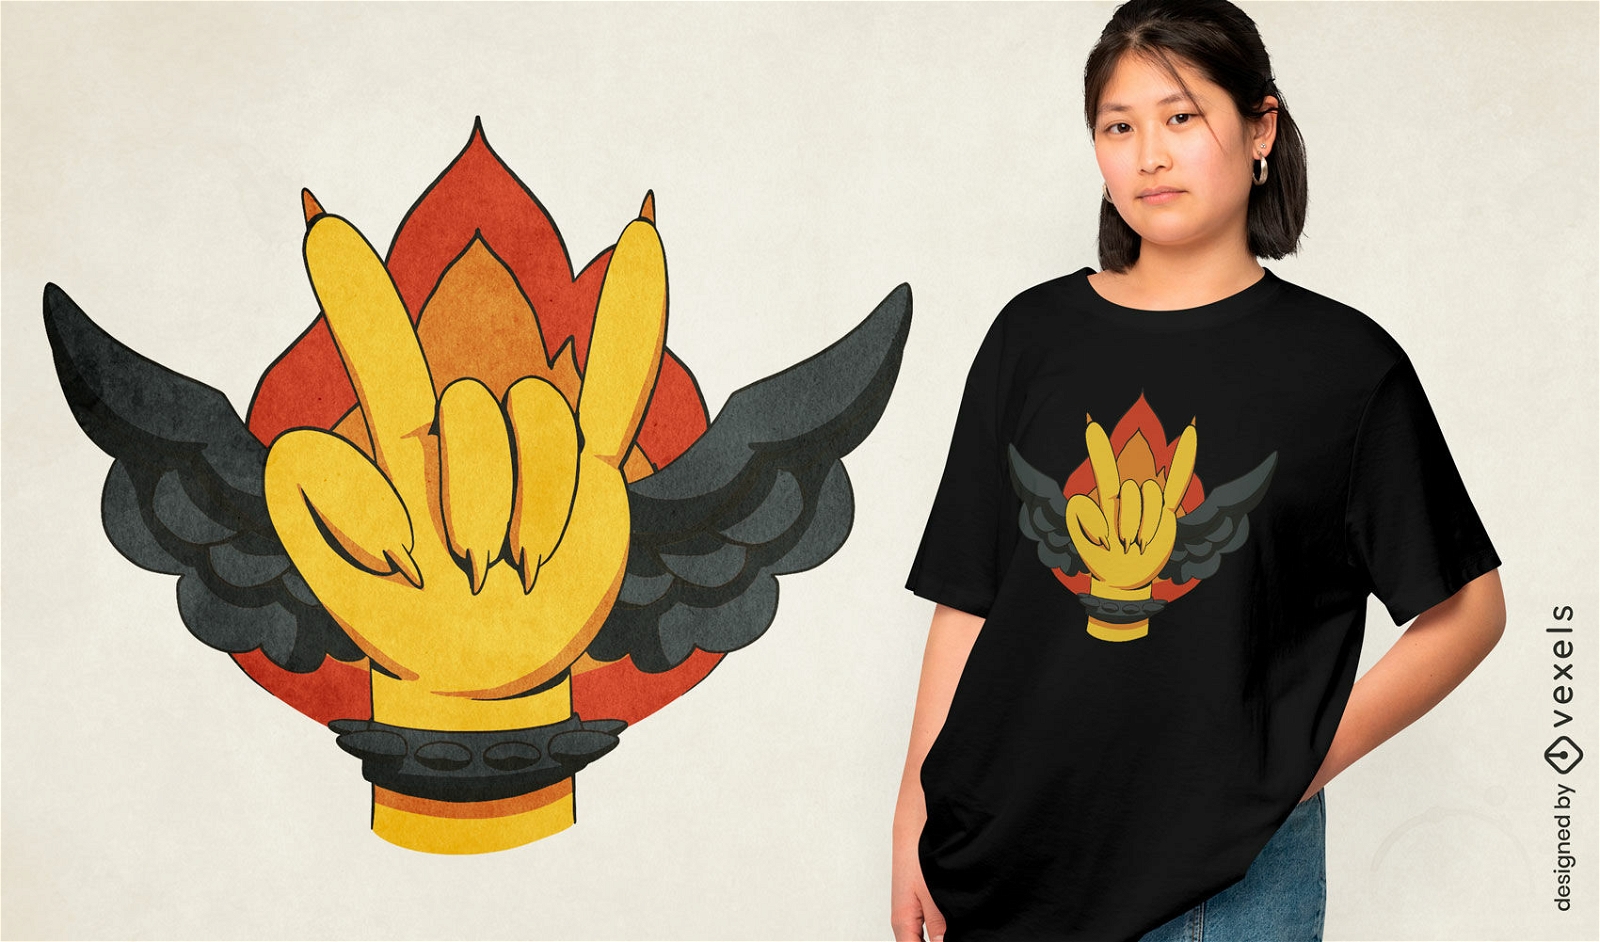 Winged fiery hand symbol t-shirt design